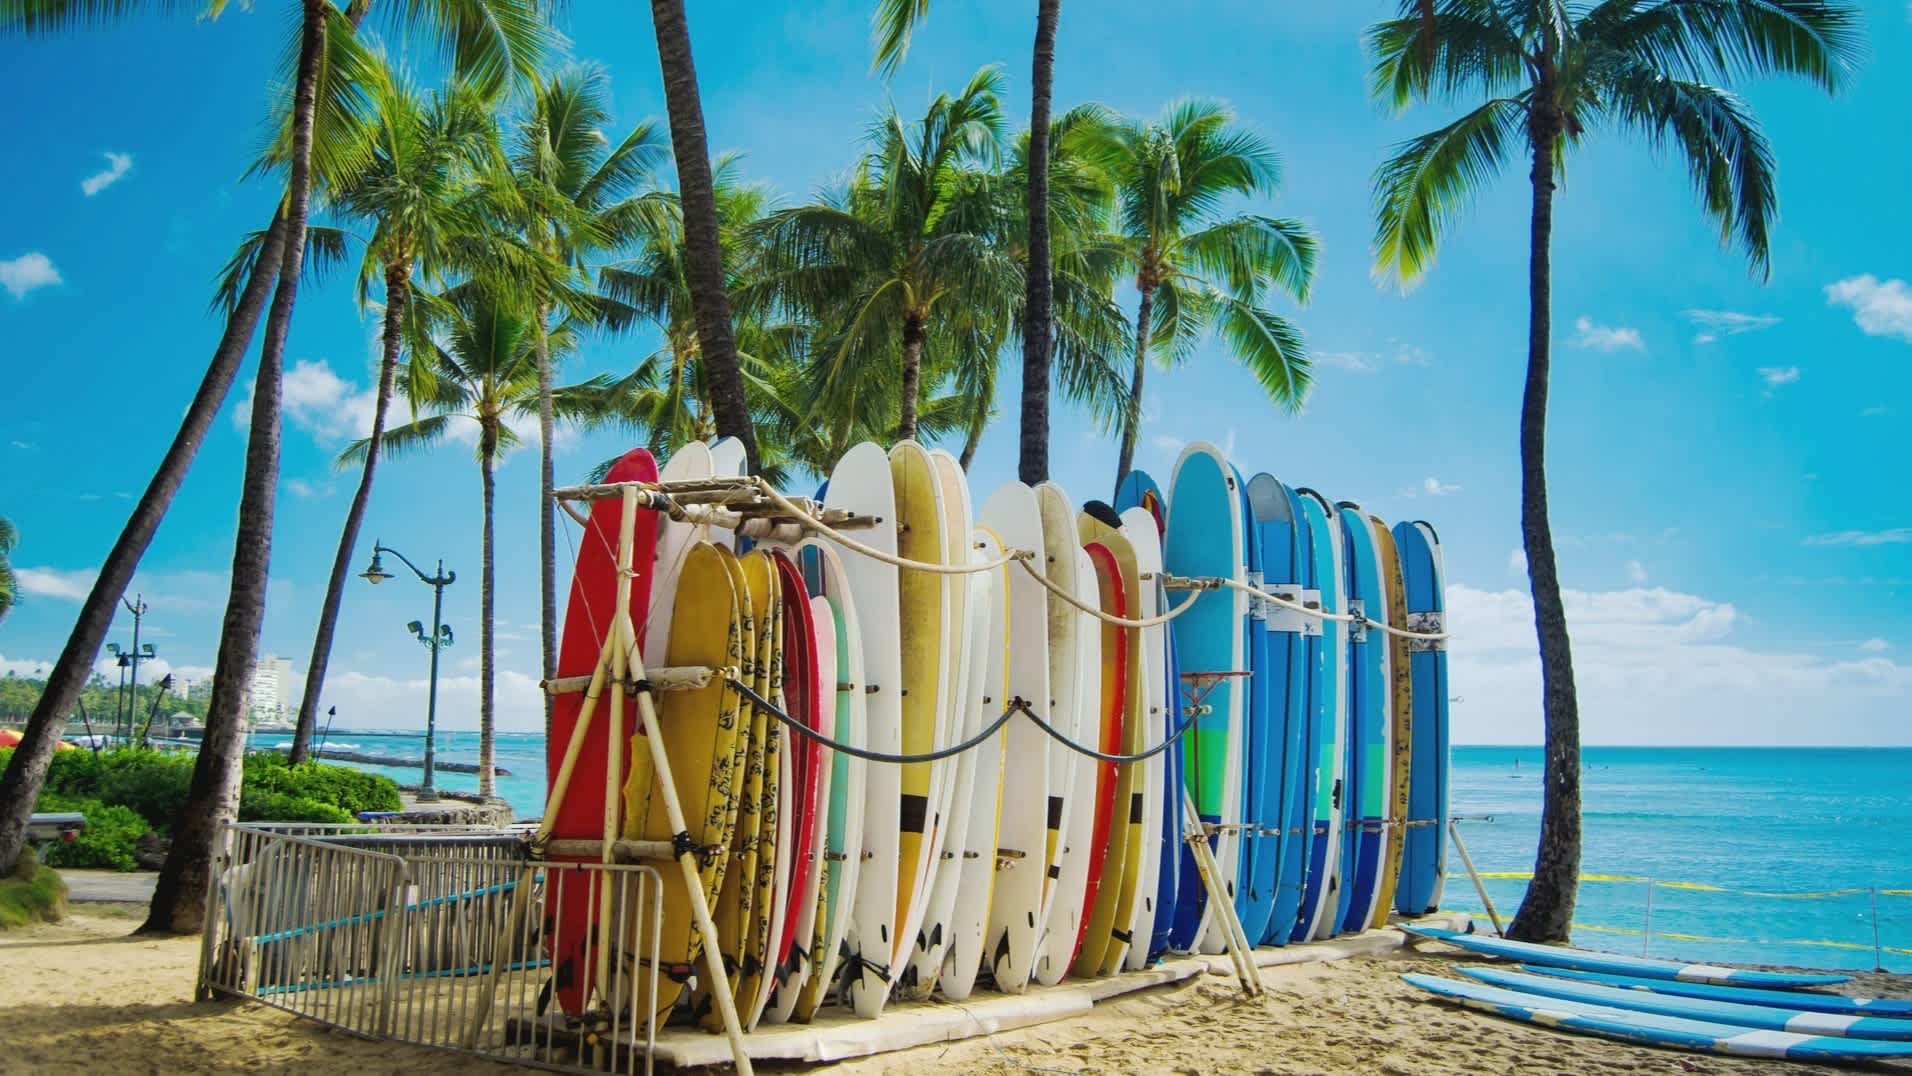 Surfbretter am berühmten Waikiki-Strand, Honolulu, Hawaii, USA bei klarem sonnigem Blick auf das Meer.